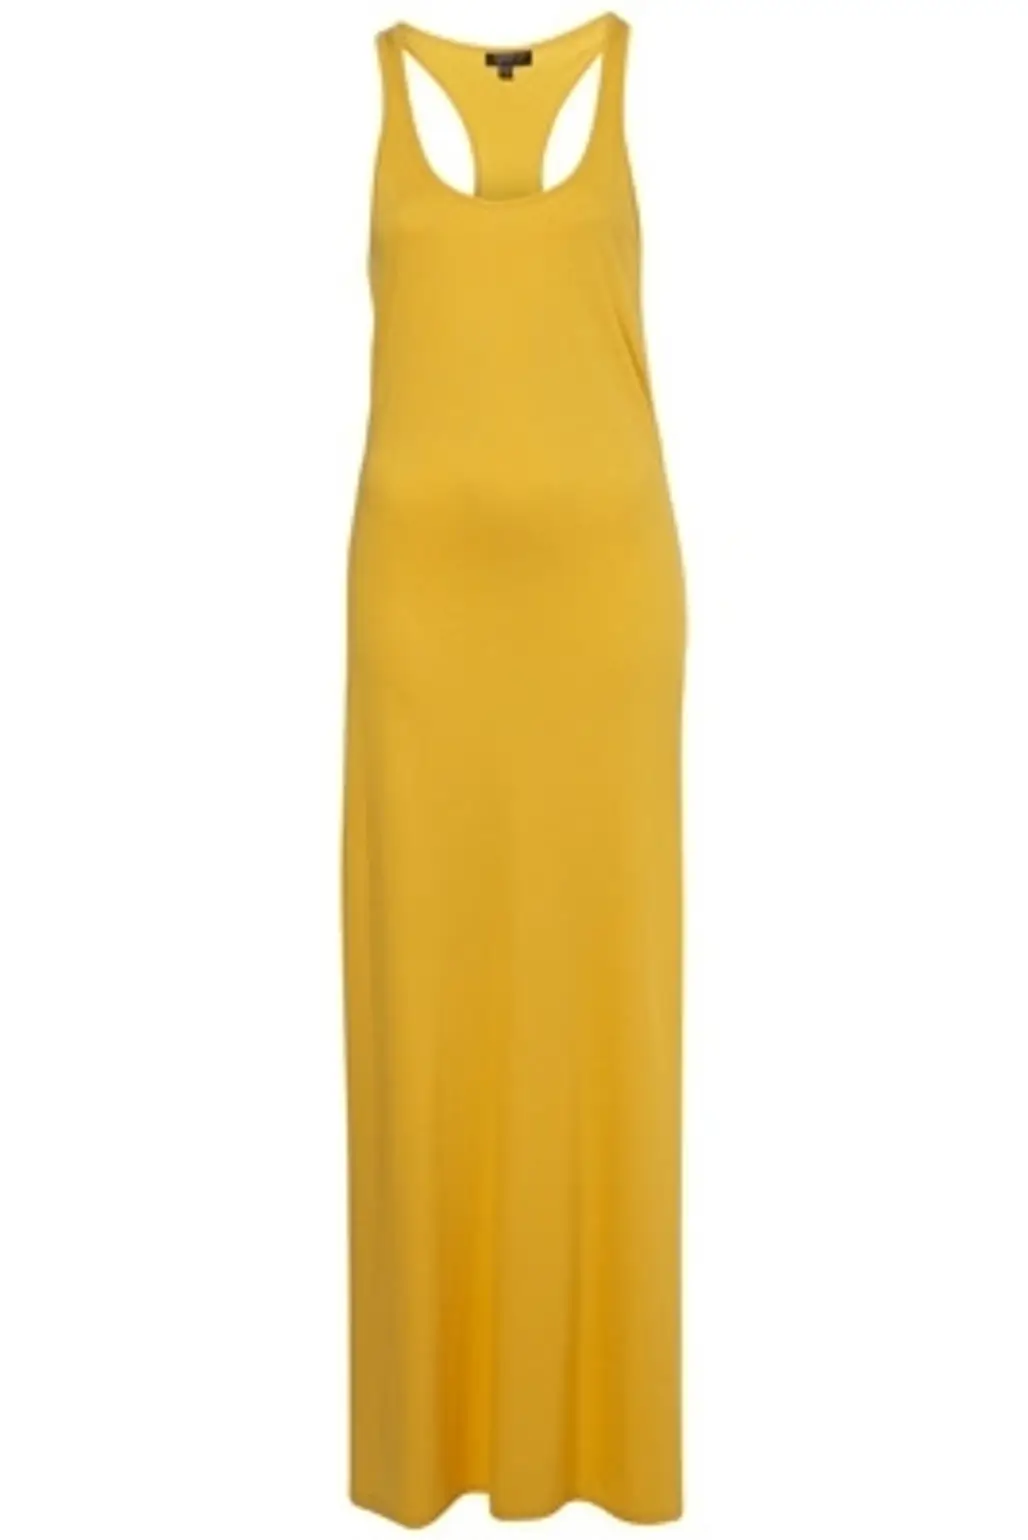 Topshop Yellow Easy Vest Maxi Dress